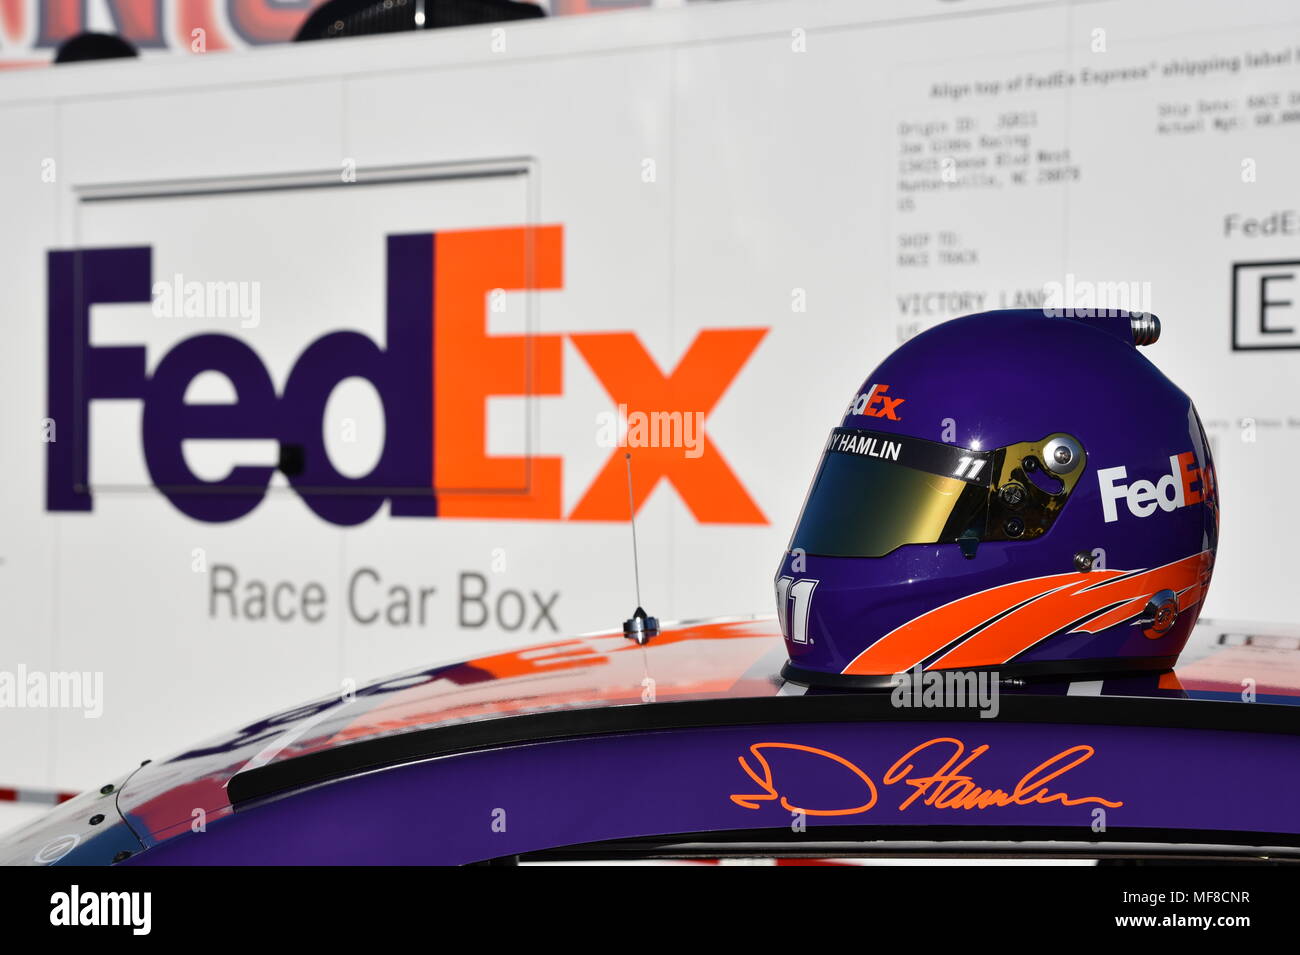 Denny Hamlin helmet on FedEx race car on display at Tempe Arizona on 4/14/18 Stock Photo